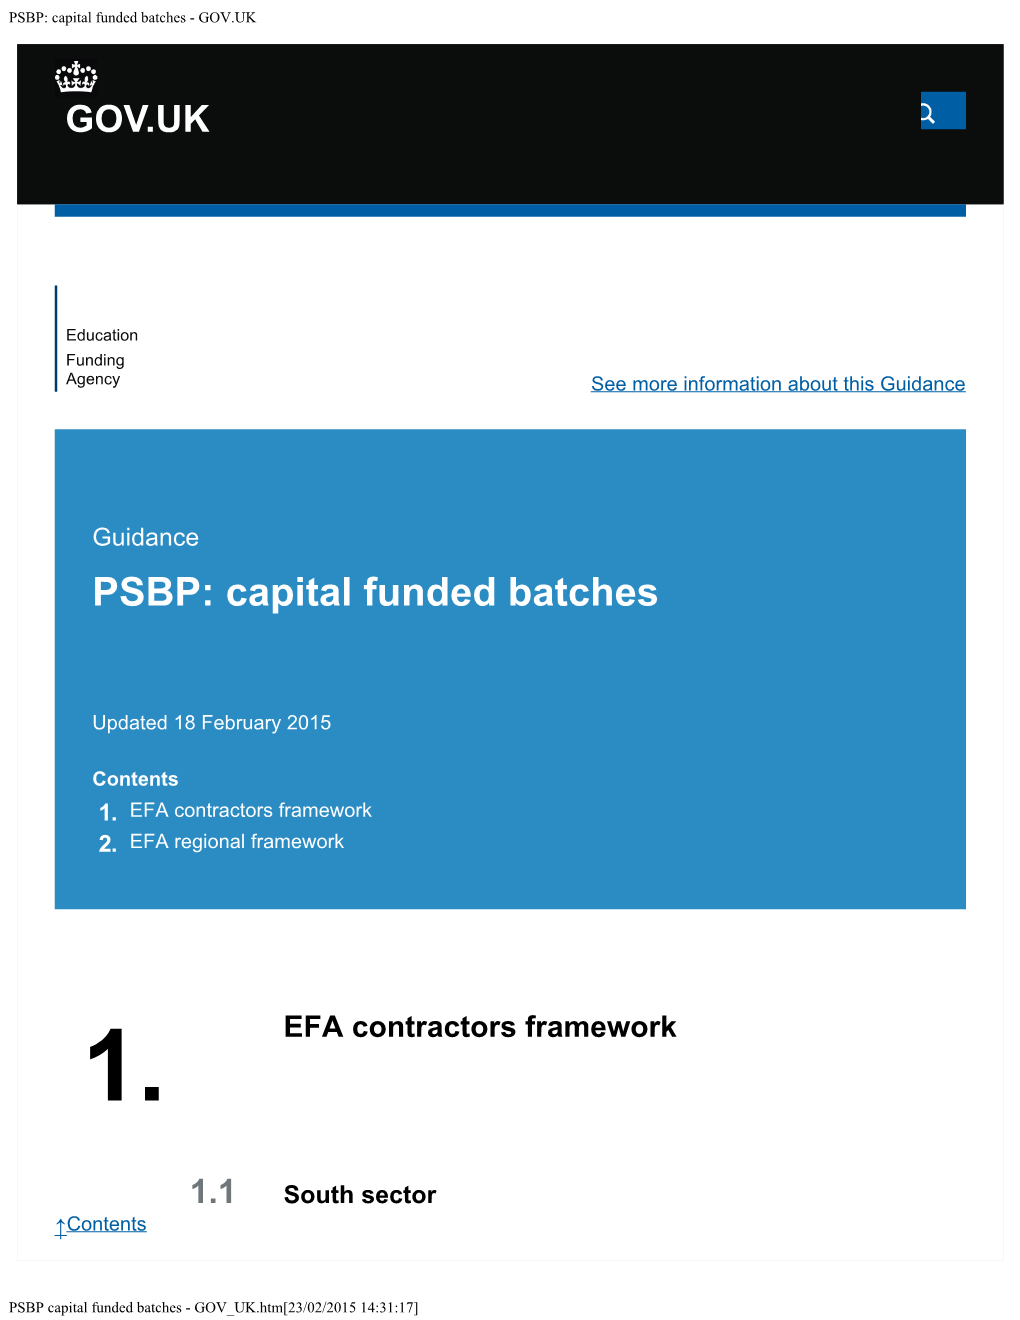 PSBP: Capital Funded Batches - GOV.UK